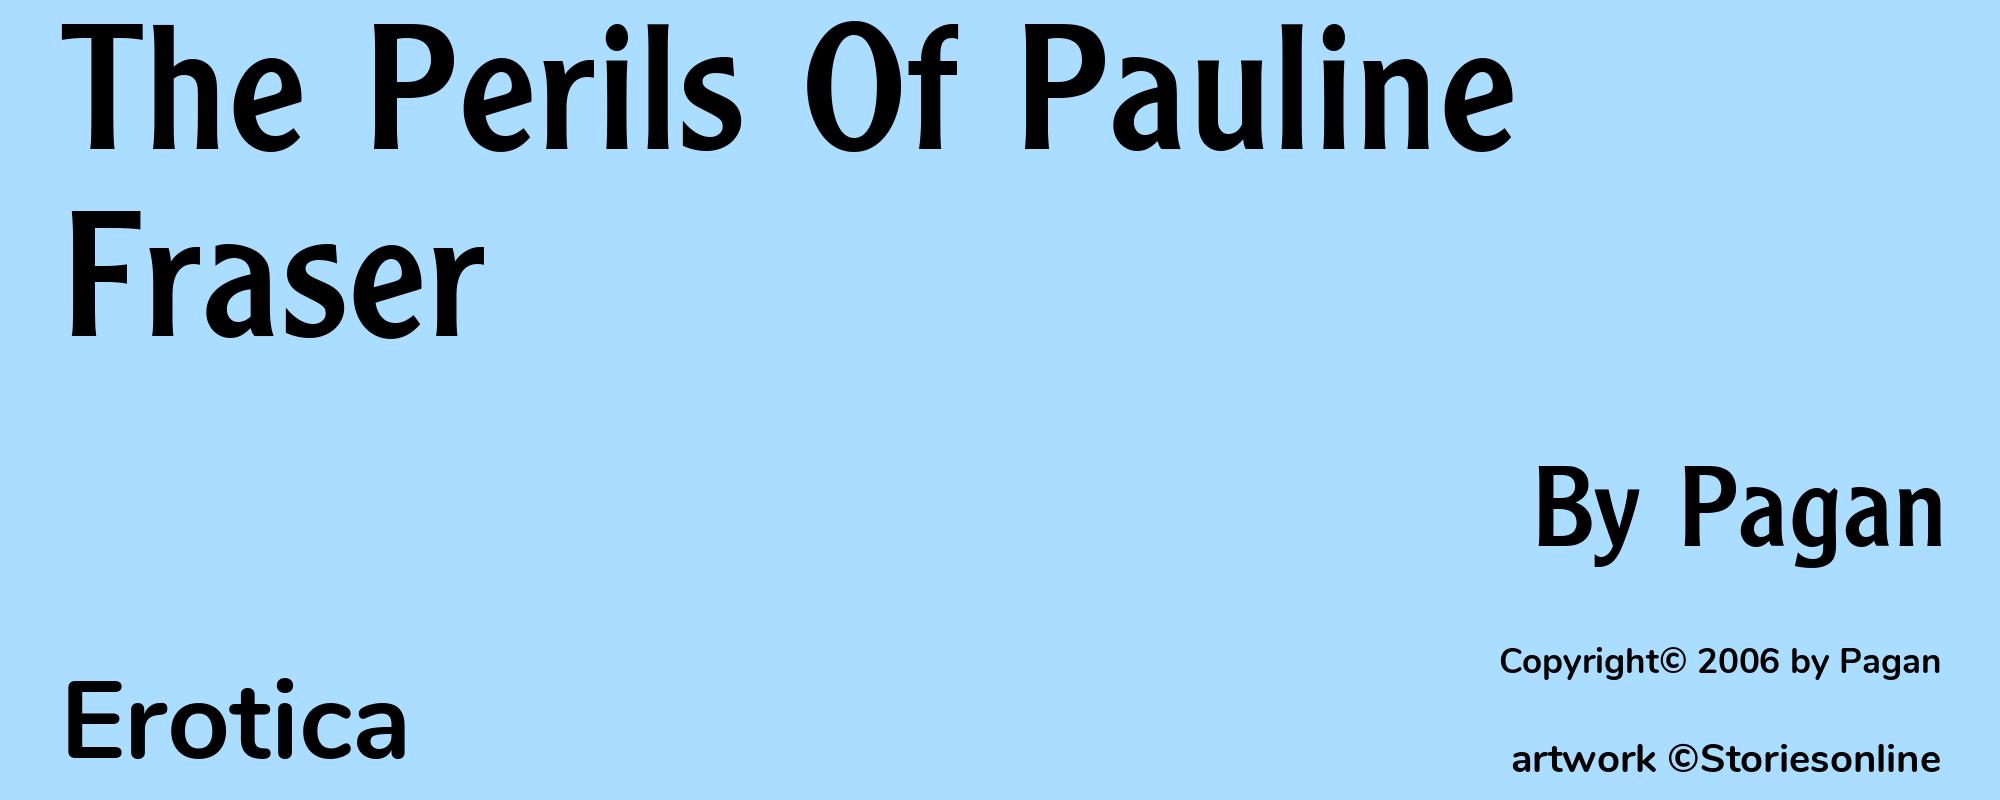 The Perils Of Pauline Fraser - Cover